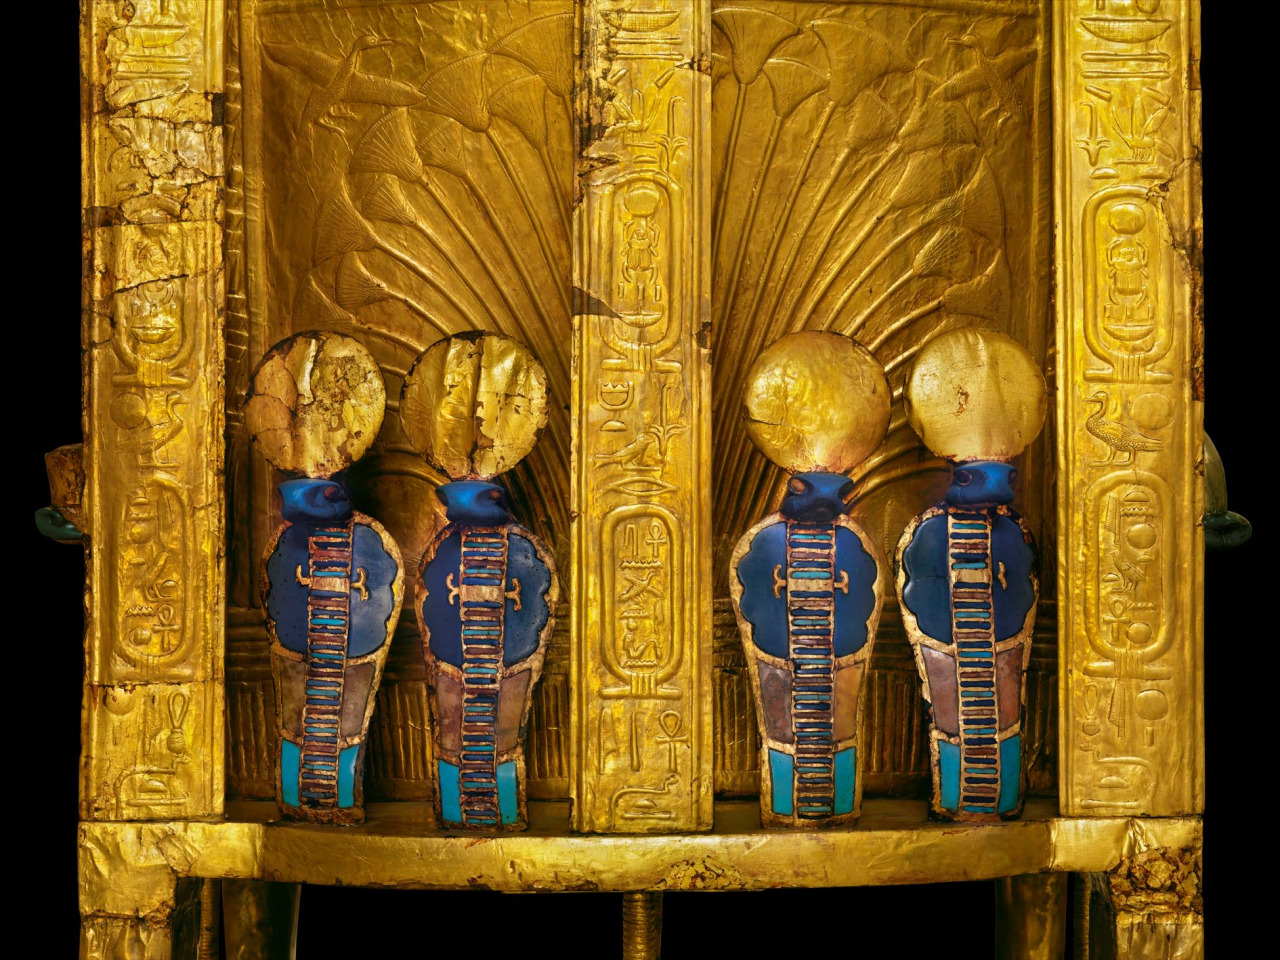 Bensozia Tutankhamun’s Throne